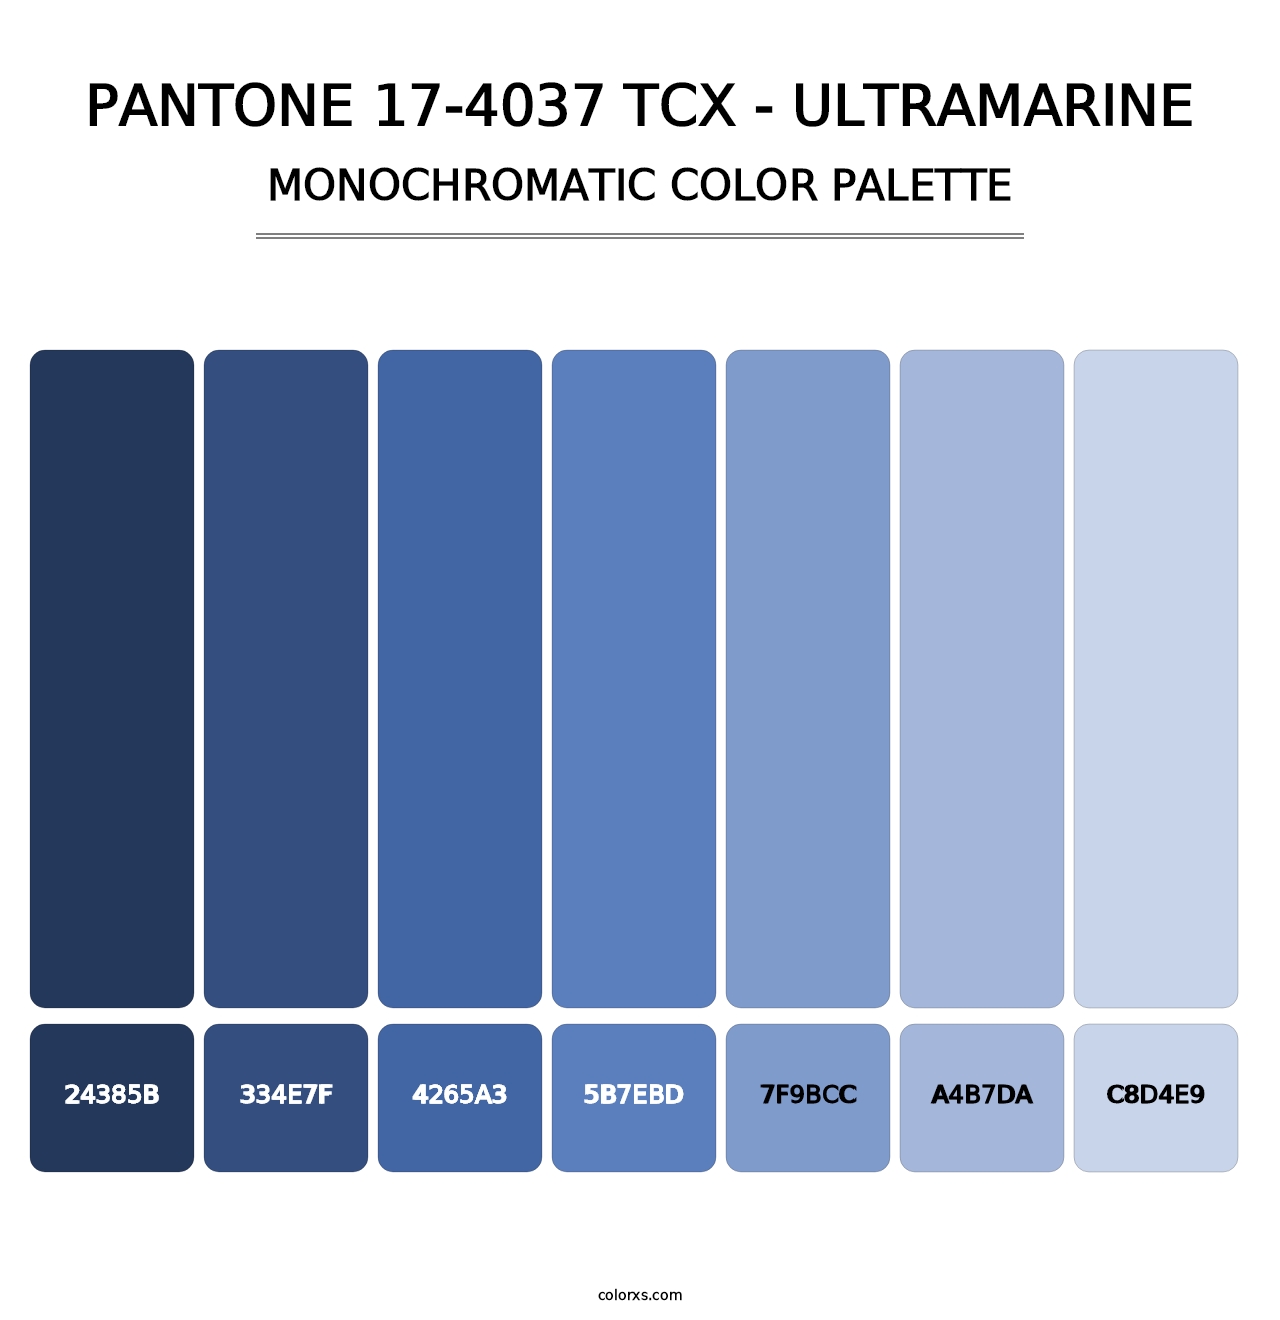 PANTONE 17-4037 TCX - Ultramarine - Monochromatic Color Palette